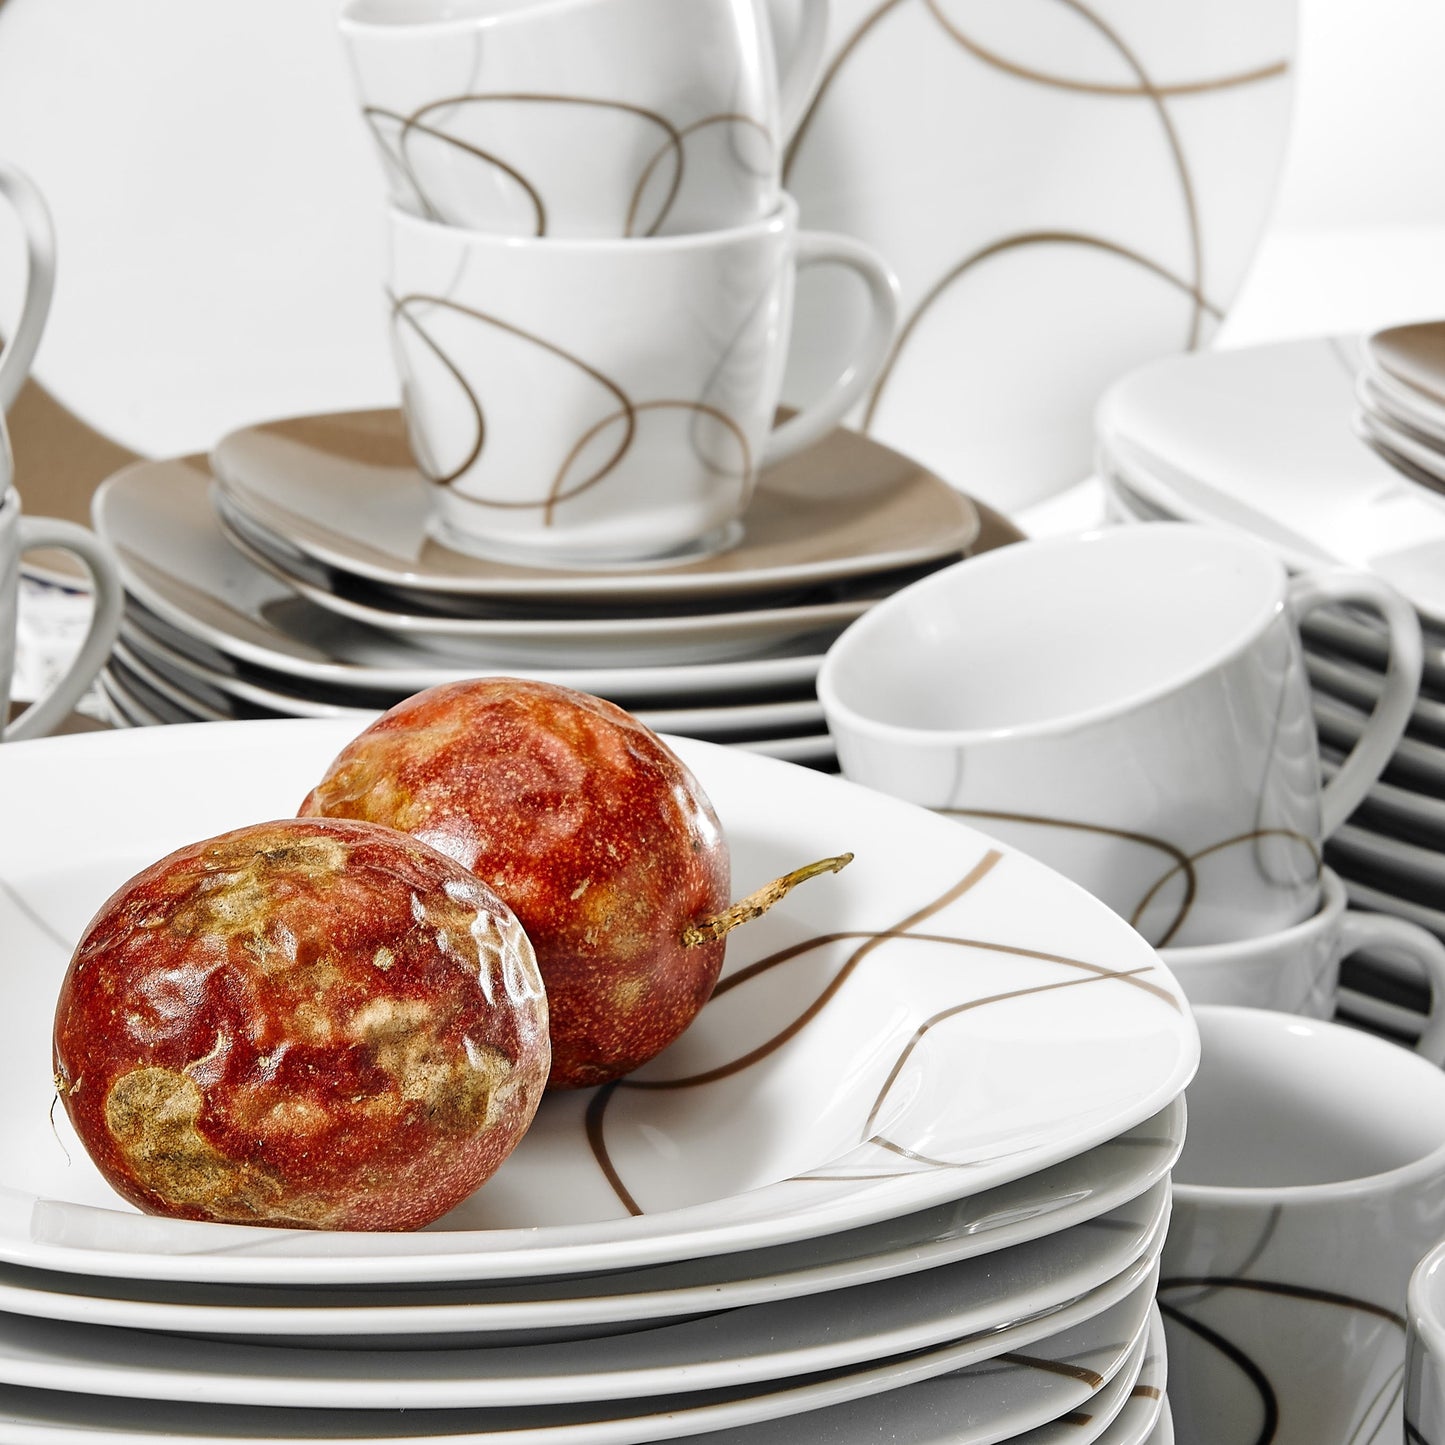 NIKITA 60-Piece Porcelain Ceramic Kitchen Dinner Plate Set with Dessert Plates/Soup Plates/Dinner Plates/Cups/Saucers - Nordic Side - 60, Ceramic, Dessert, Dinner, Kitchen, NIKITA, Piece, Pla